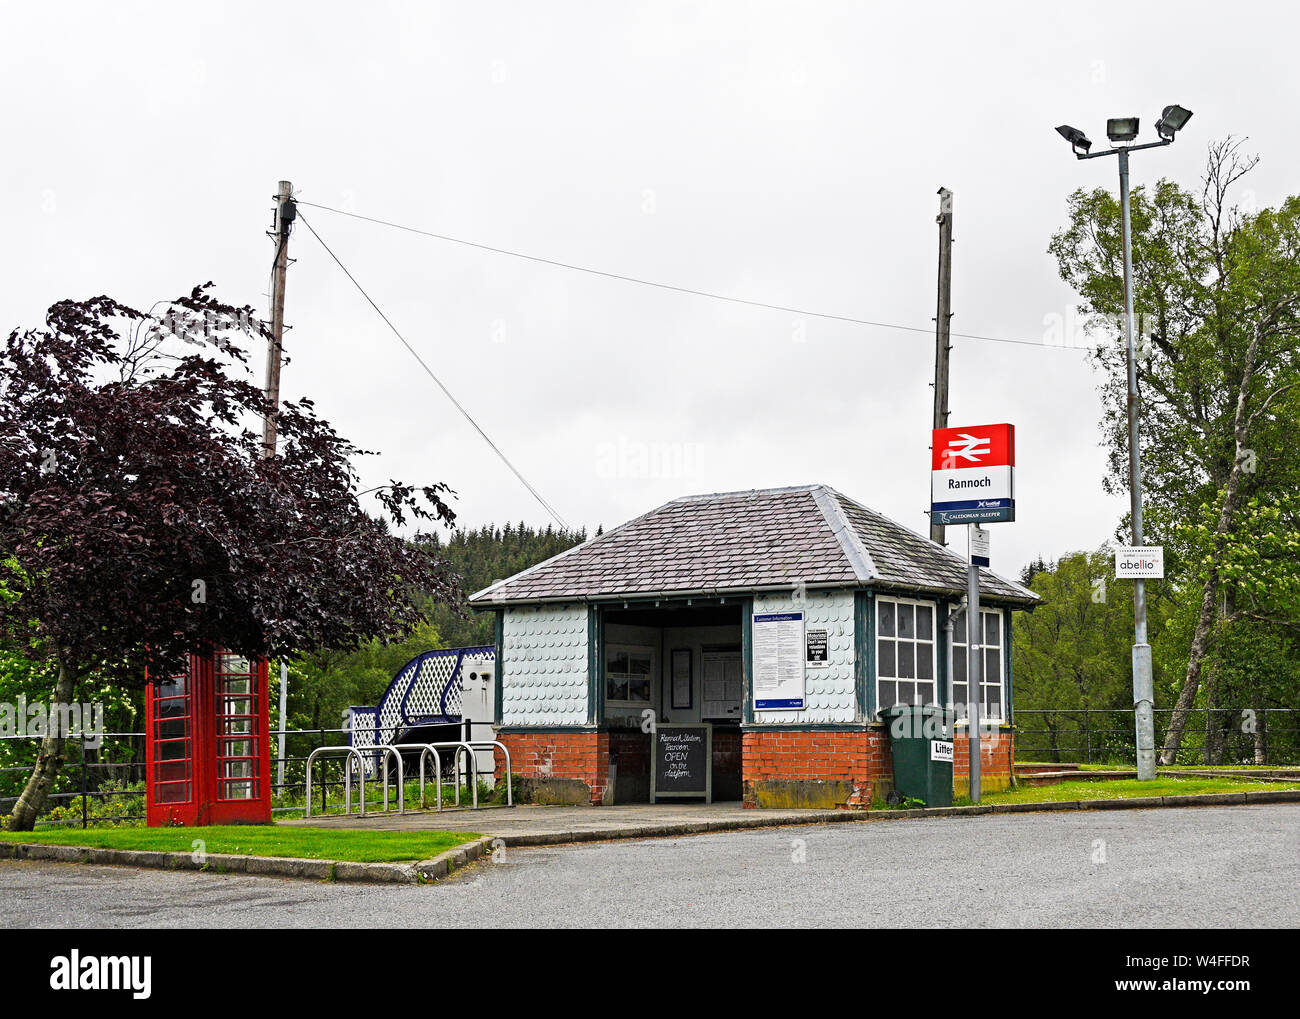 Rannoch Railway Station, Perth and Kinross, Scotland, United Kingdom, Europe. Stock Photo